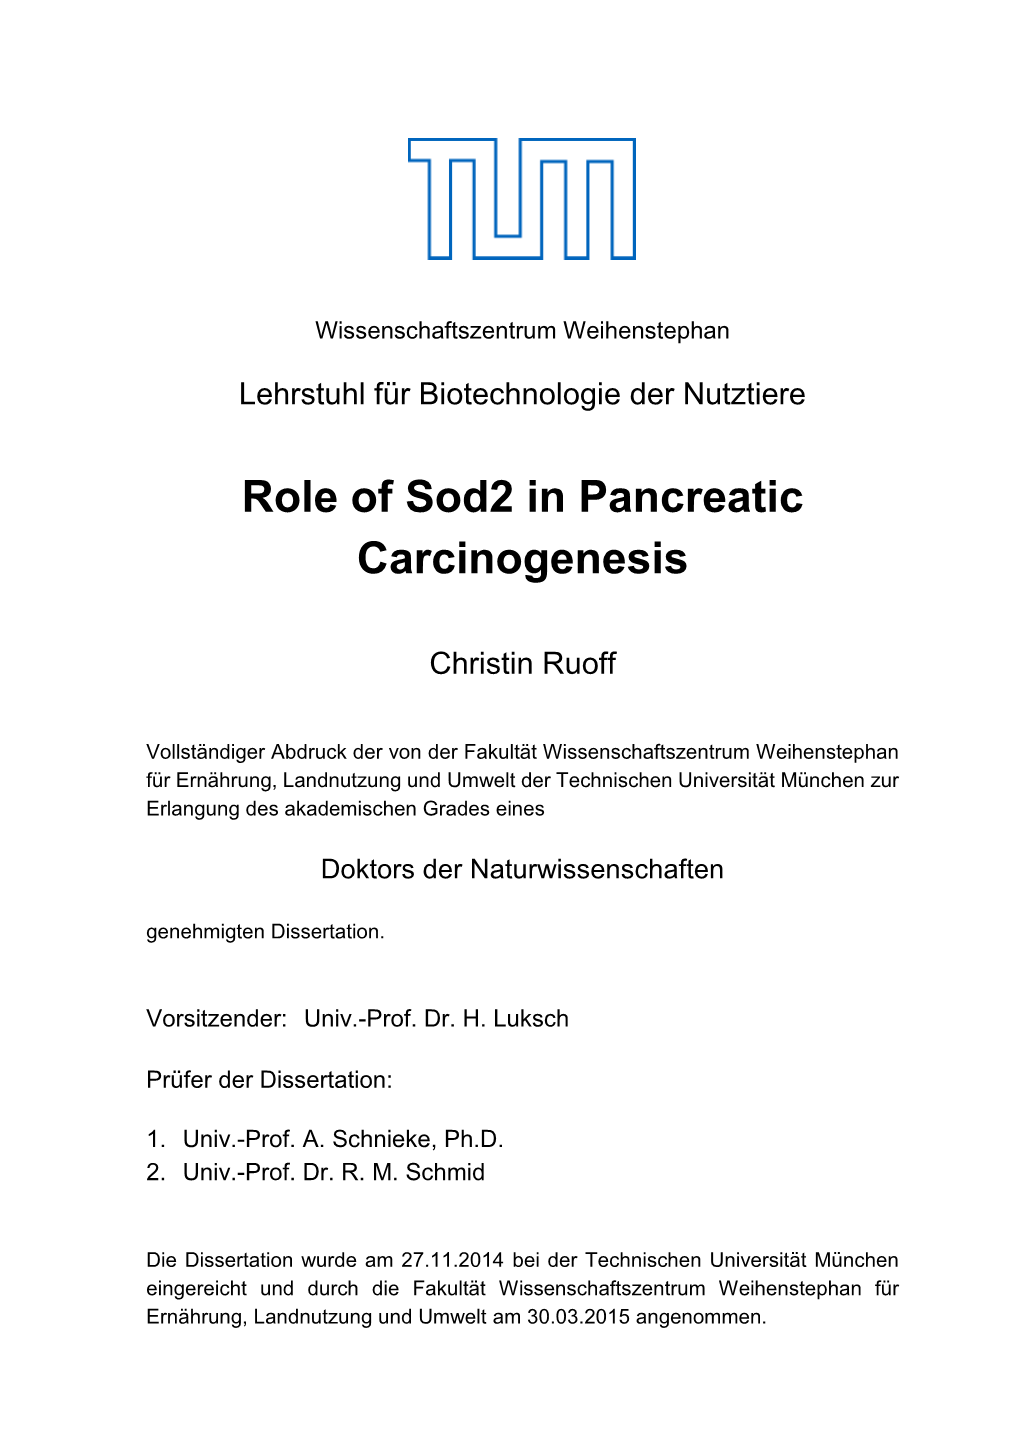 Role of Sod2 in Pancreatic Carcinogenesis